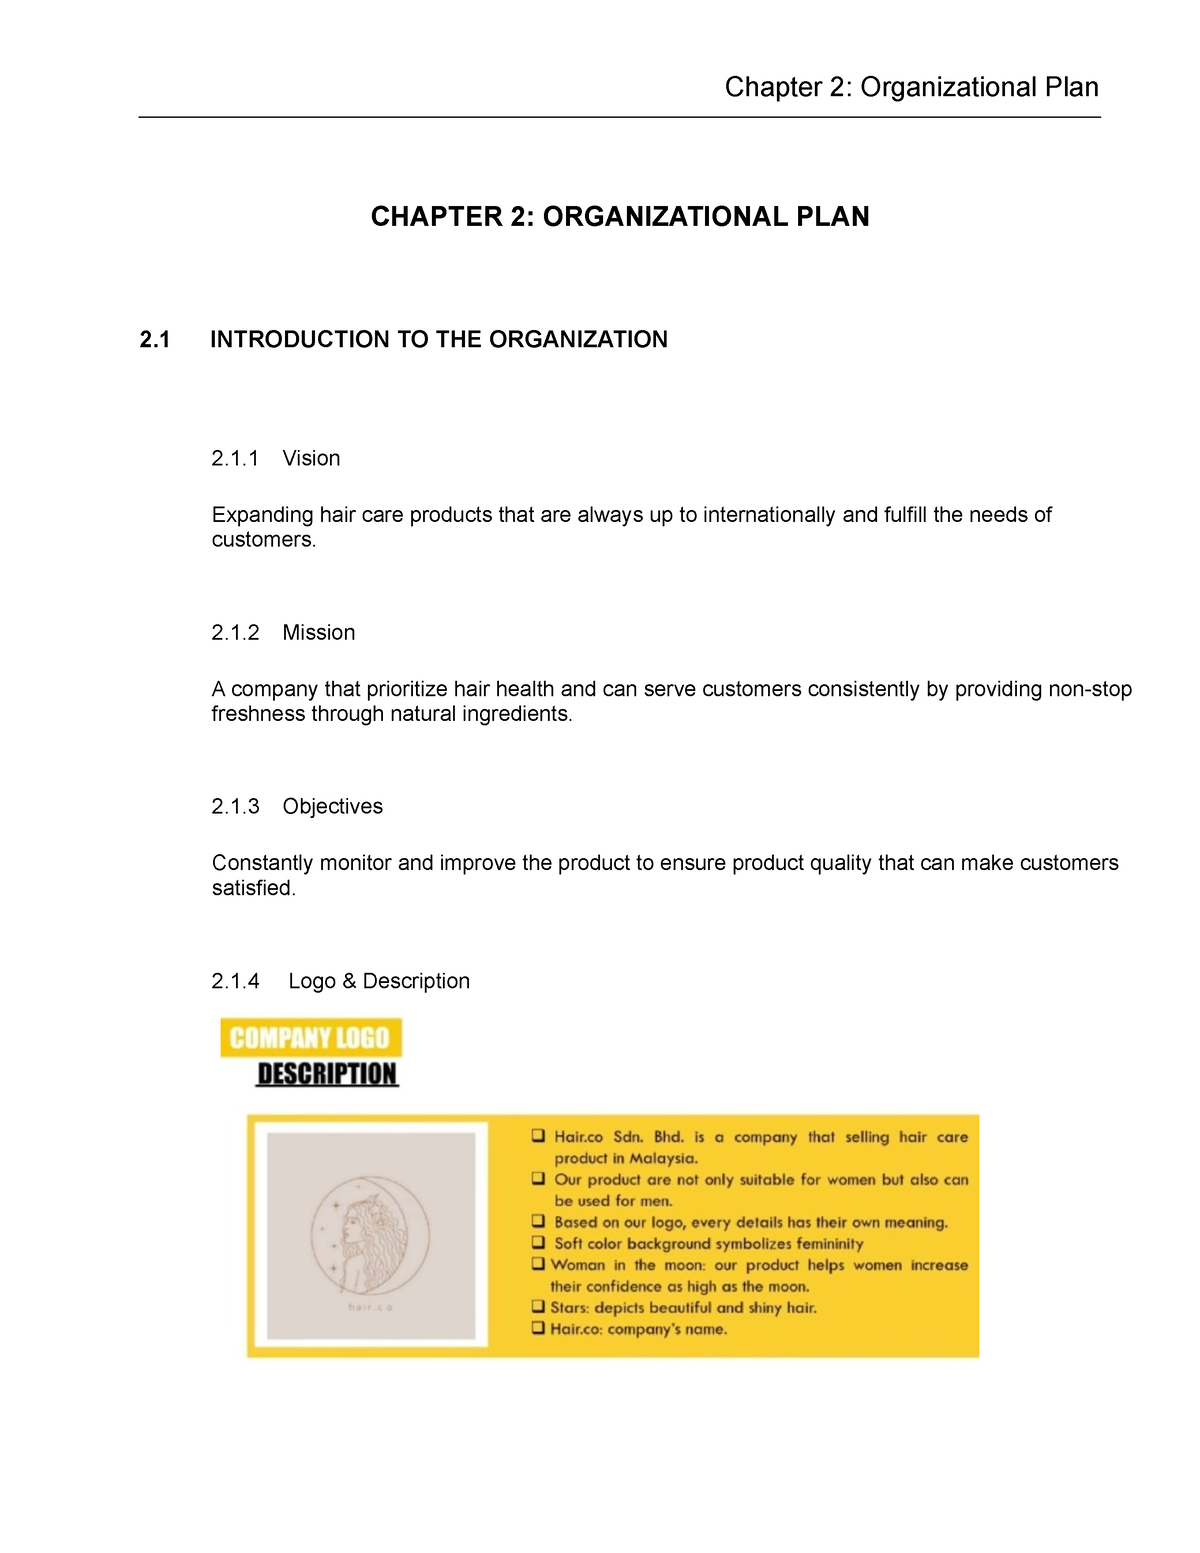 business plan chapter 2 pdf